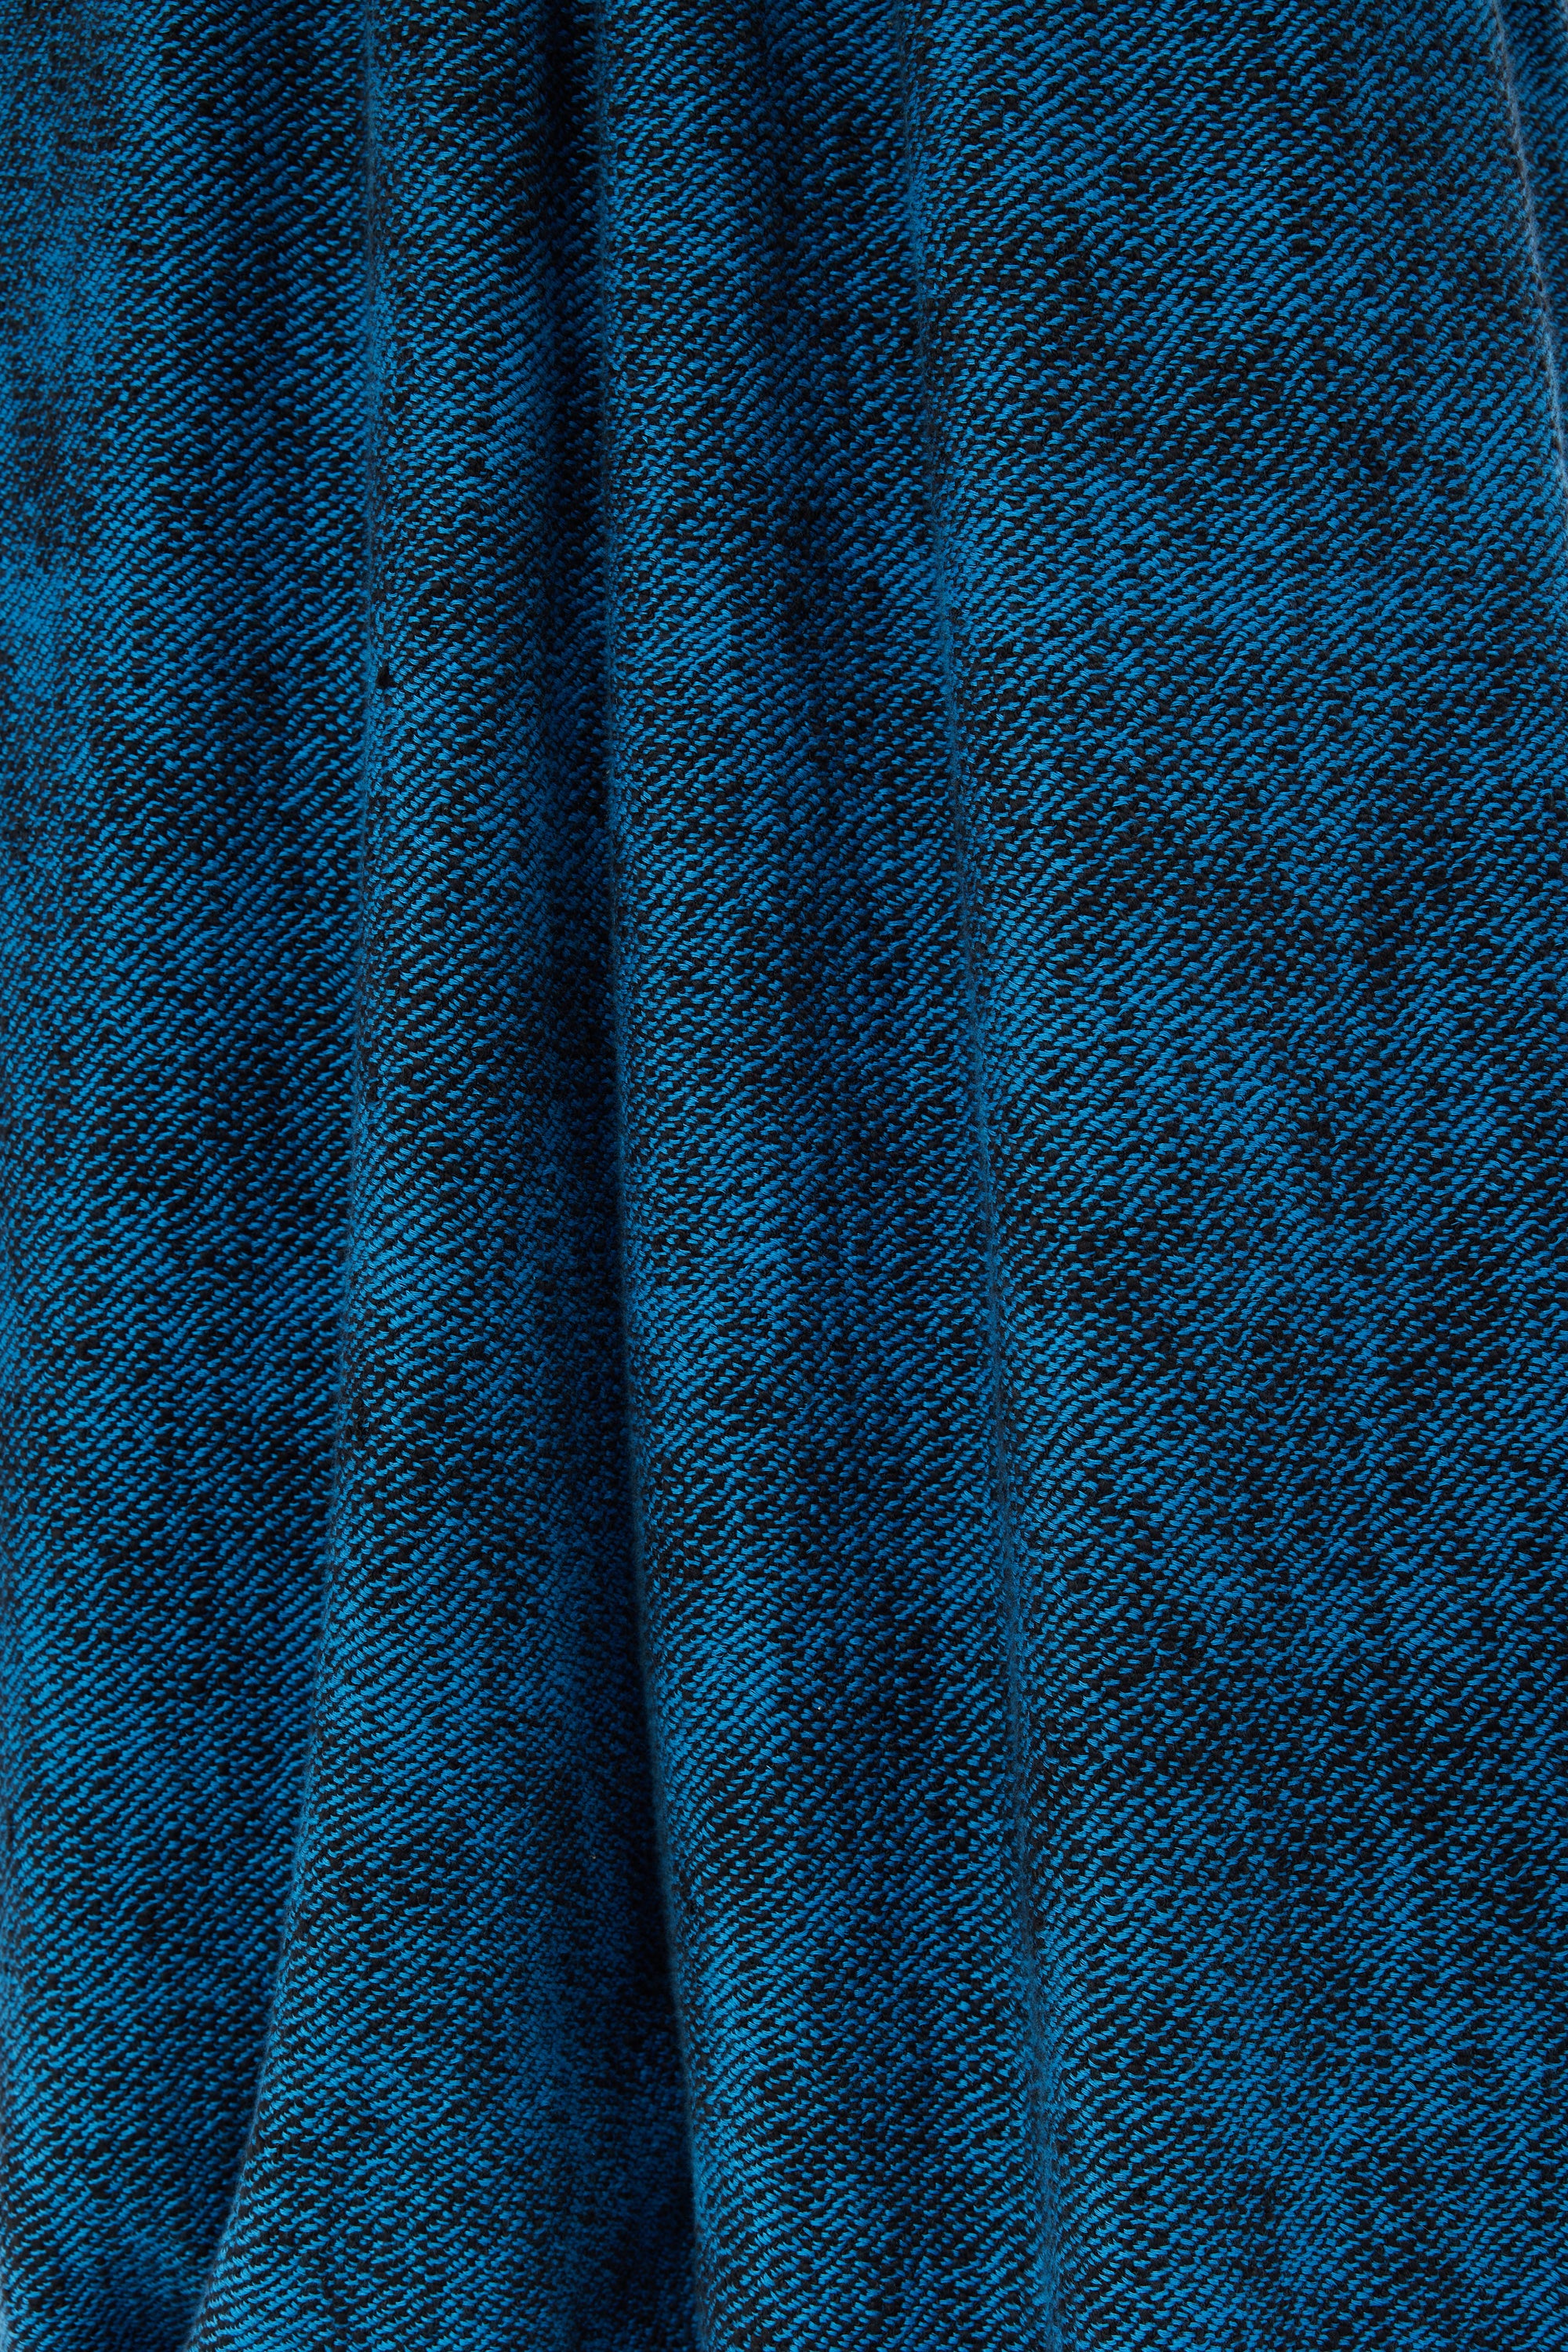 HAREM PANT : BLUE BOUCLE TWILL